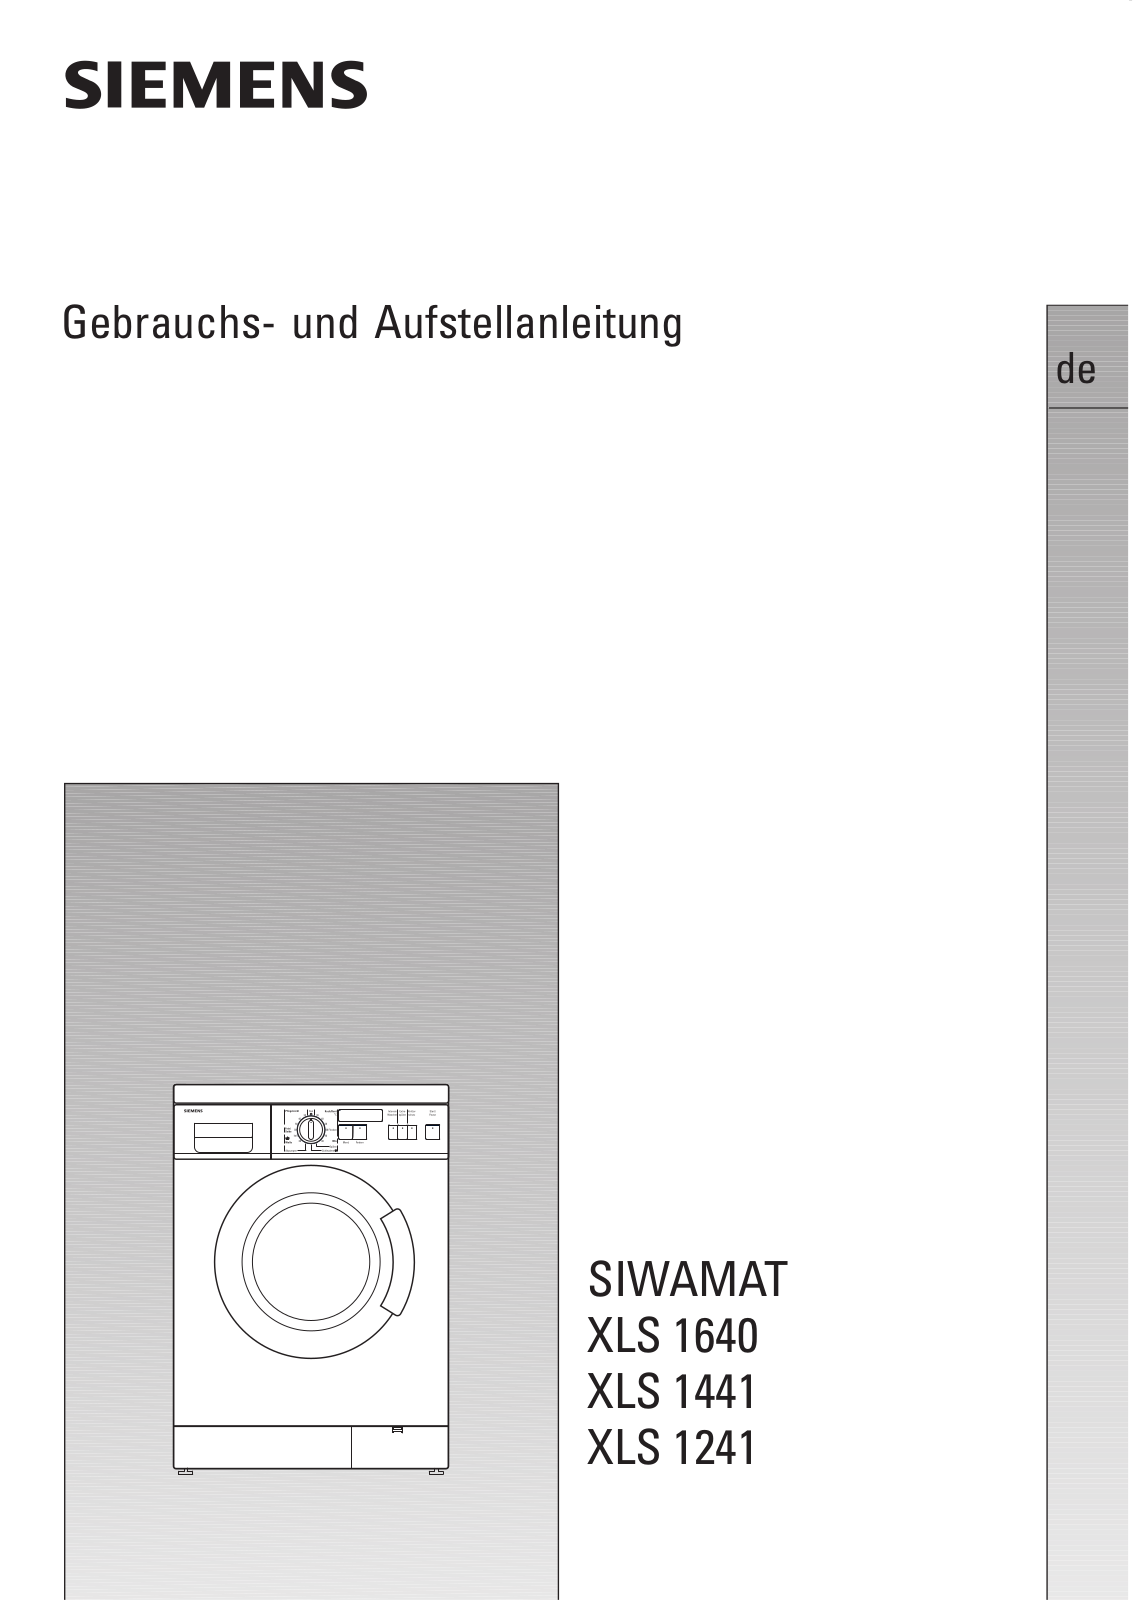 Siemens XLS 1241, XLS 1441, XLS 1640 User Manual